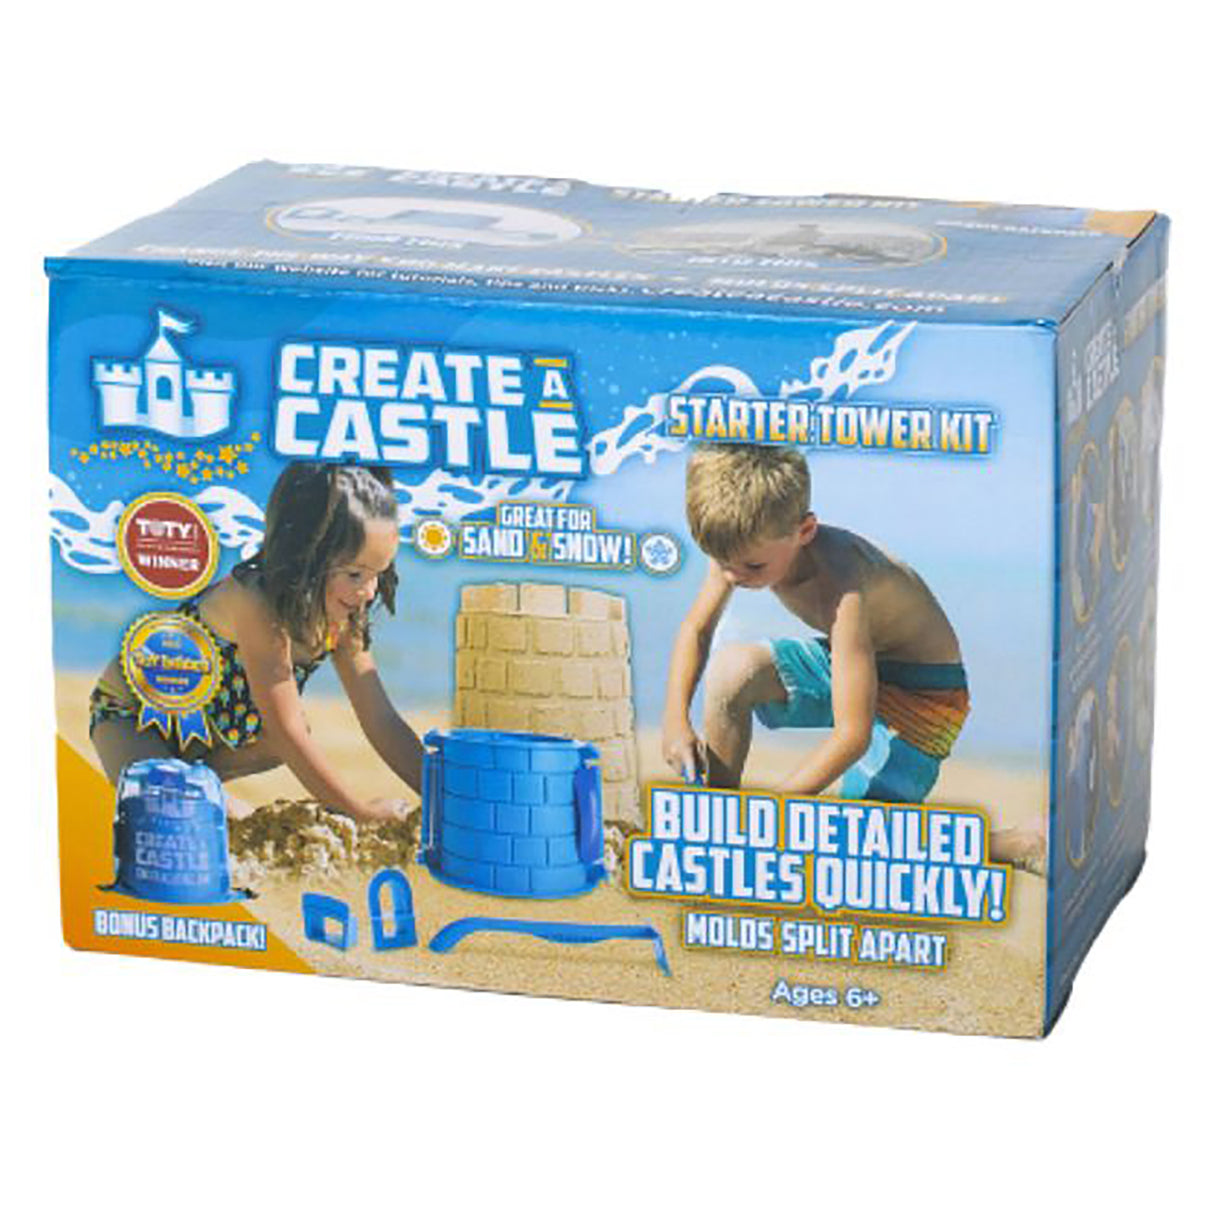 Create a Castle Starter Tower Kit